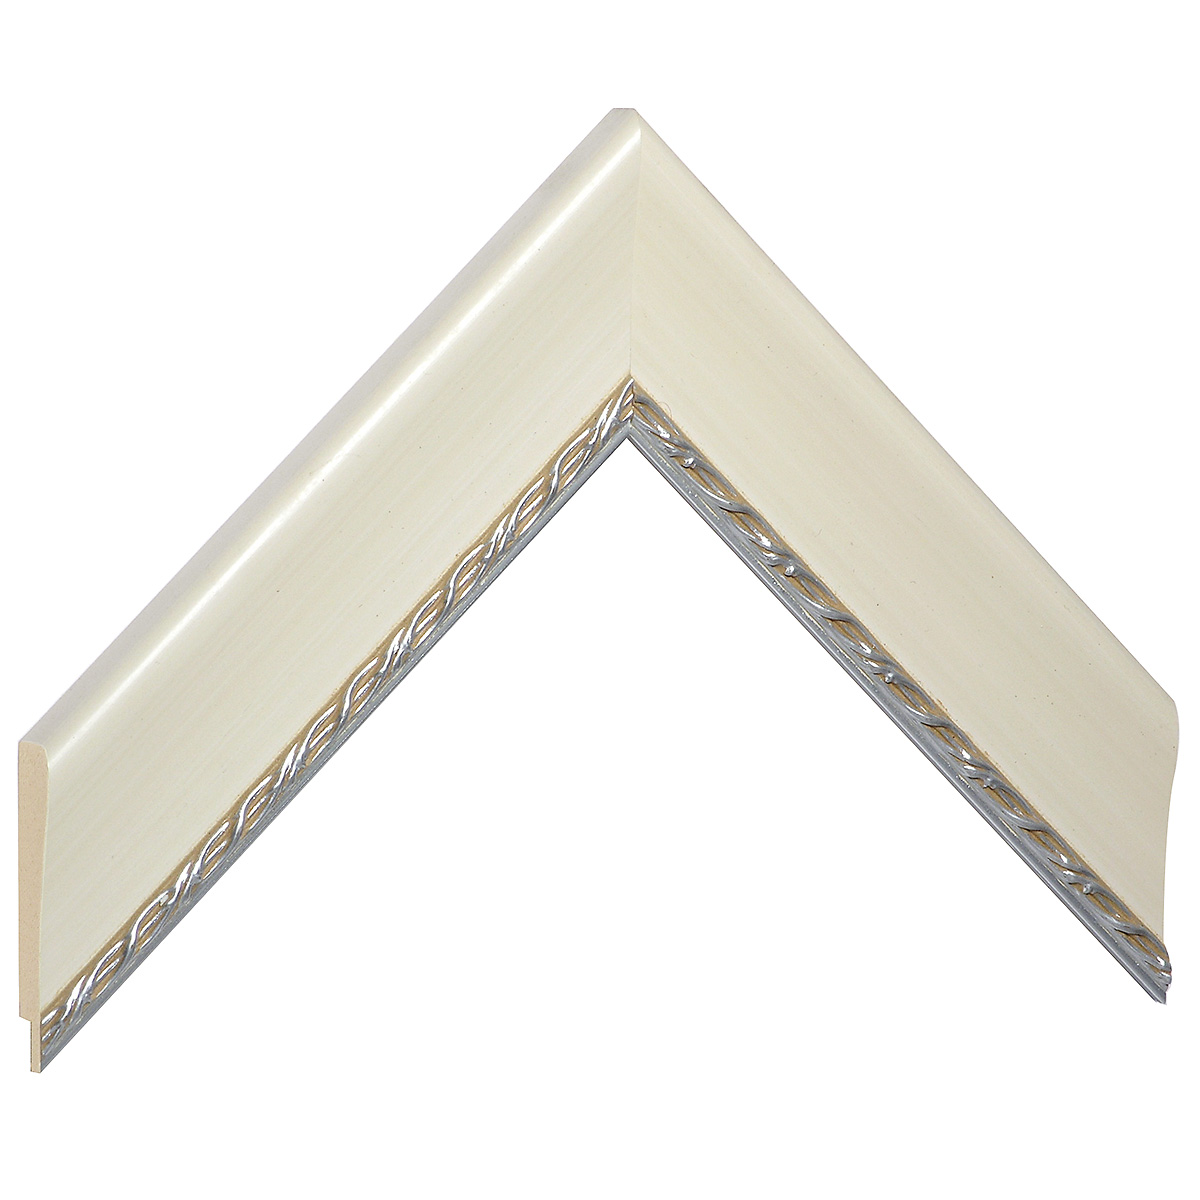 Profil pin lamelar pt. pass - Lățime 40 mm - cu decorațiuni argintii - Mostră